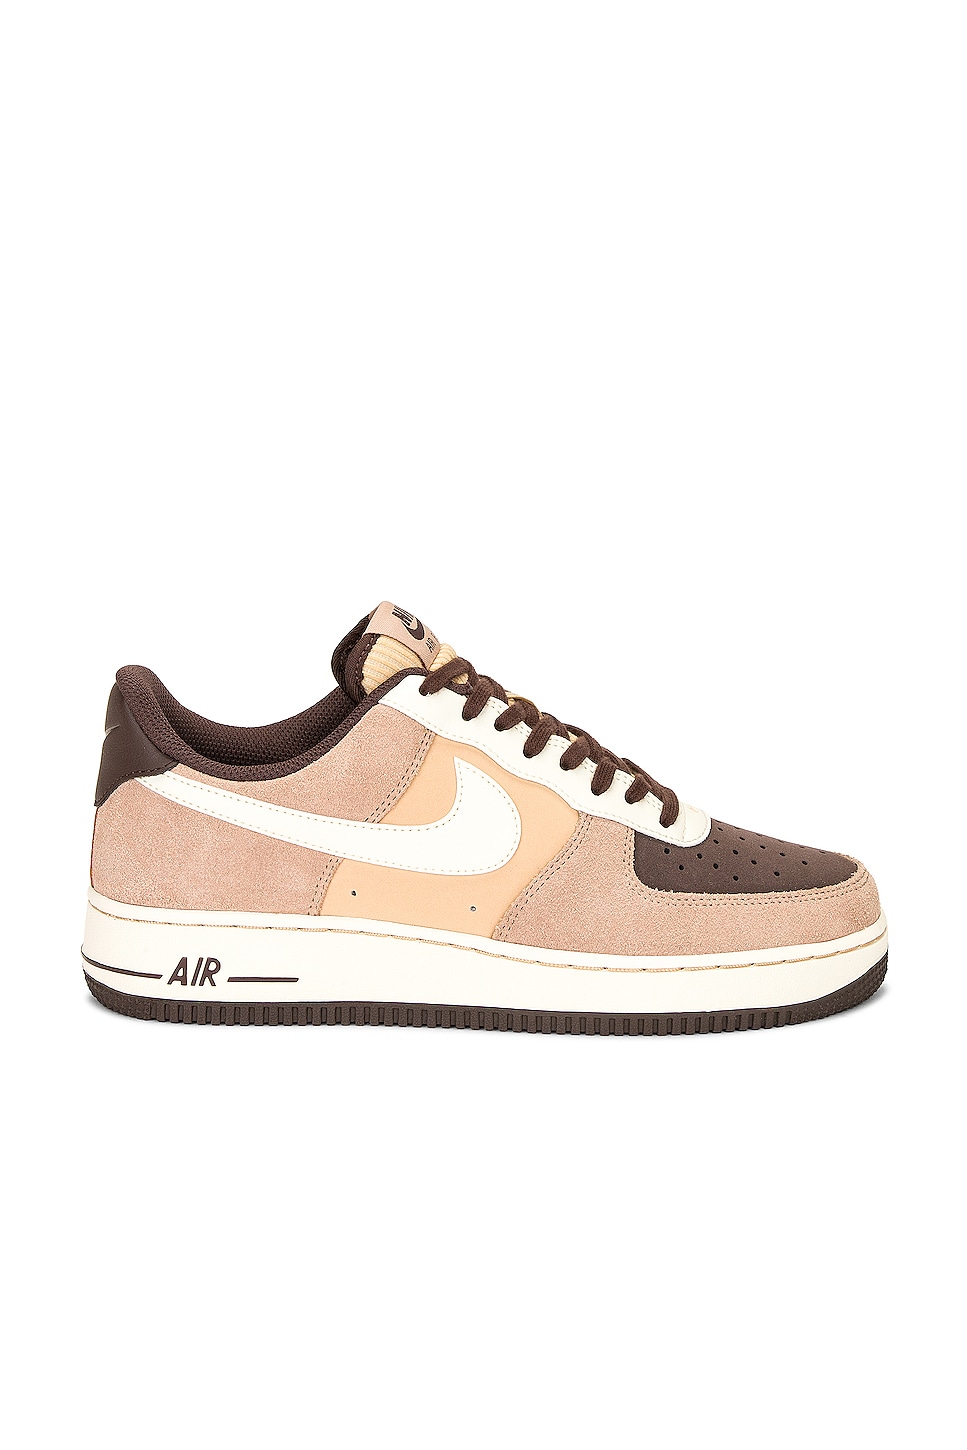 Nike Air Force 1 '07 LV8 Sneaker in Brown - Size 13